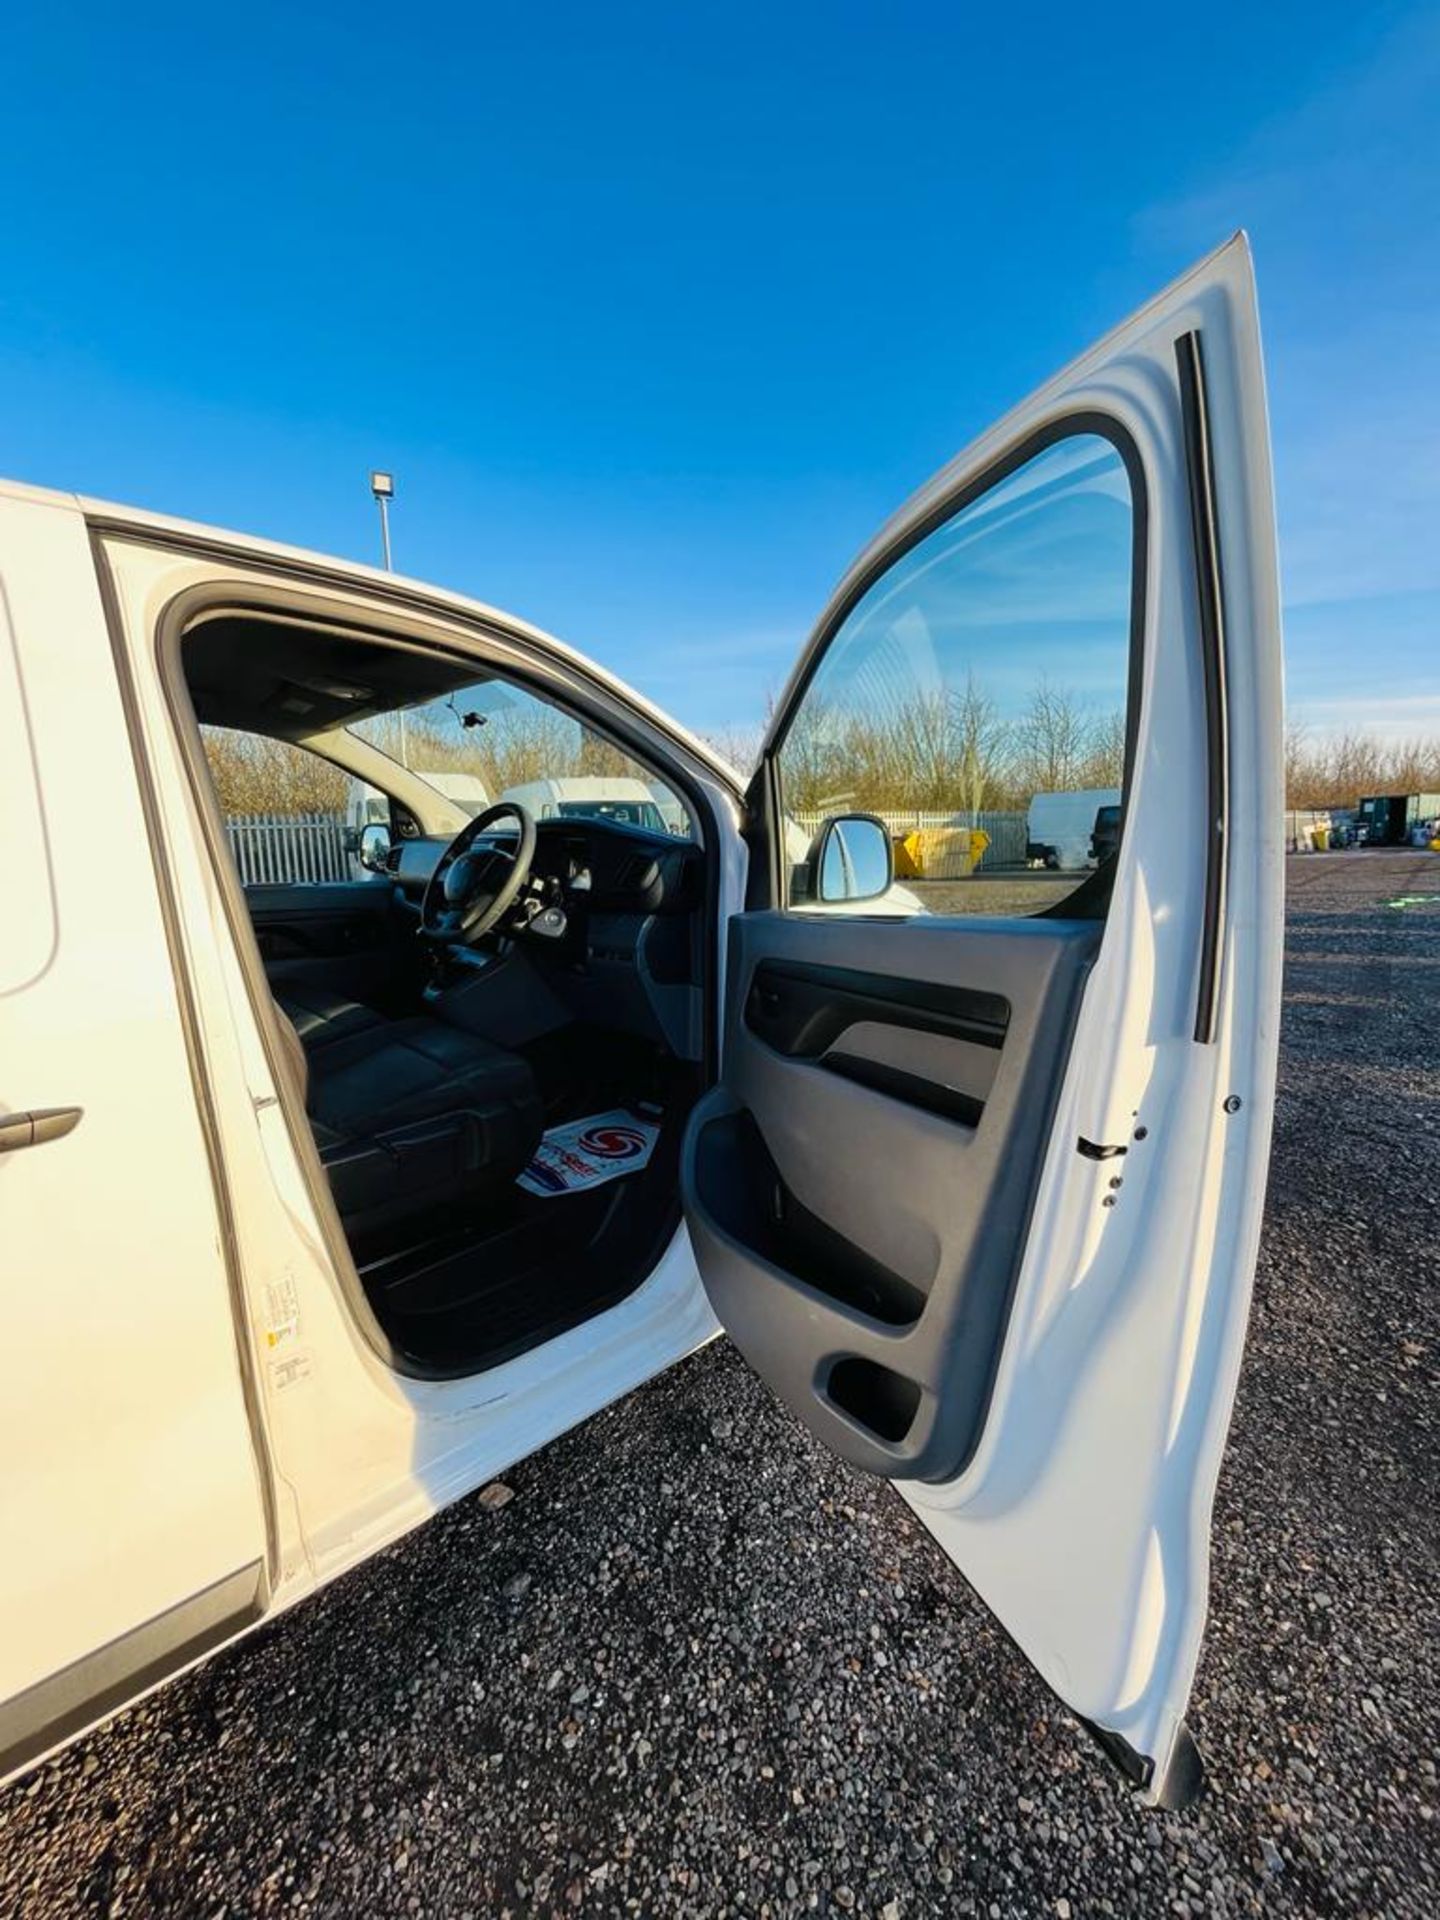 ** ON SALE ** Peugeot Expert S Standard 1.6 BlueHDI 2017 '17 Reg' - ULEZ Compliant - Panel Van - Image 14 of 21